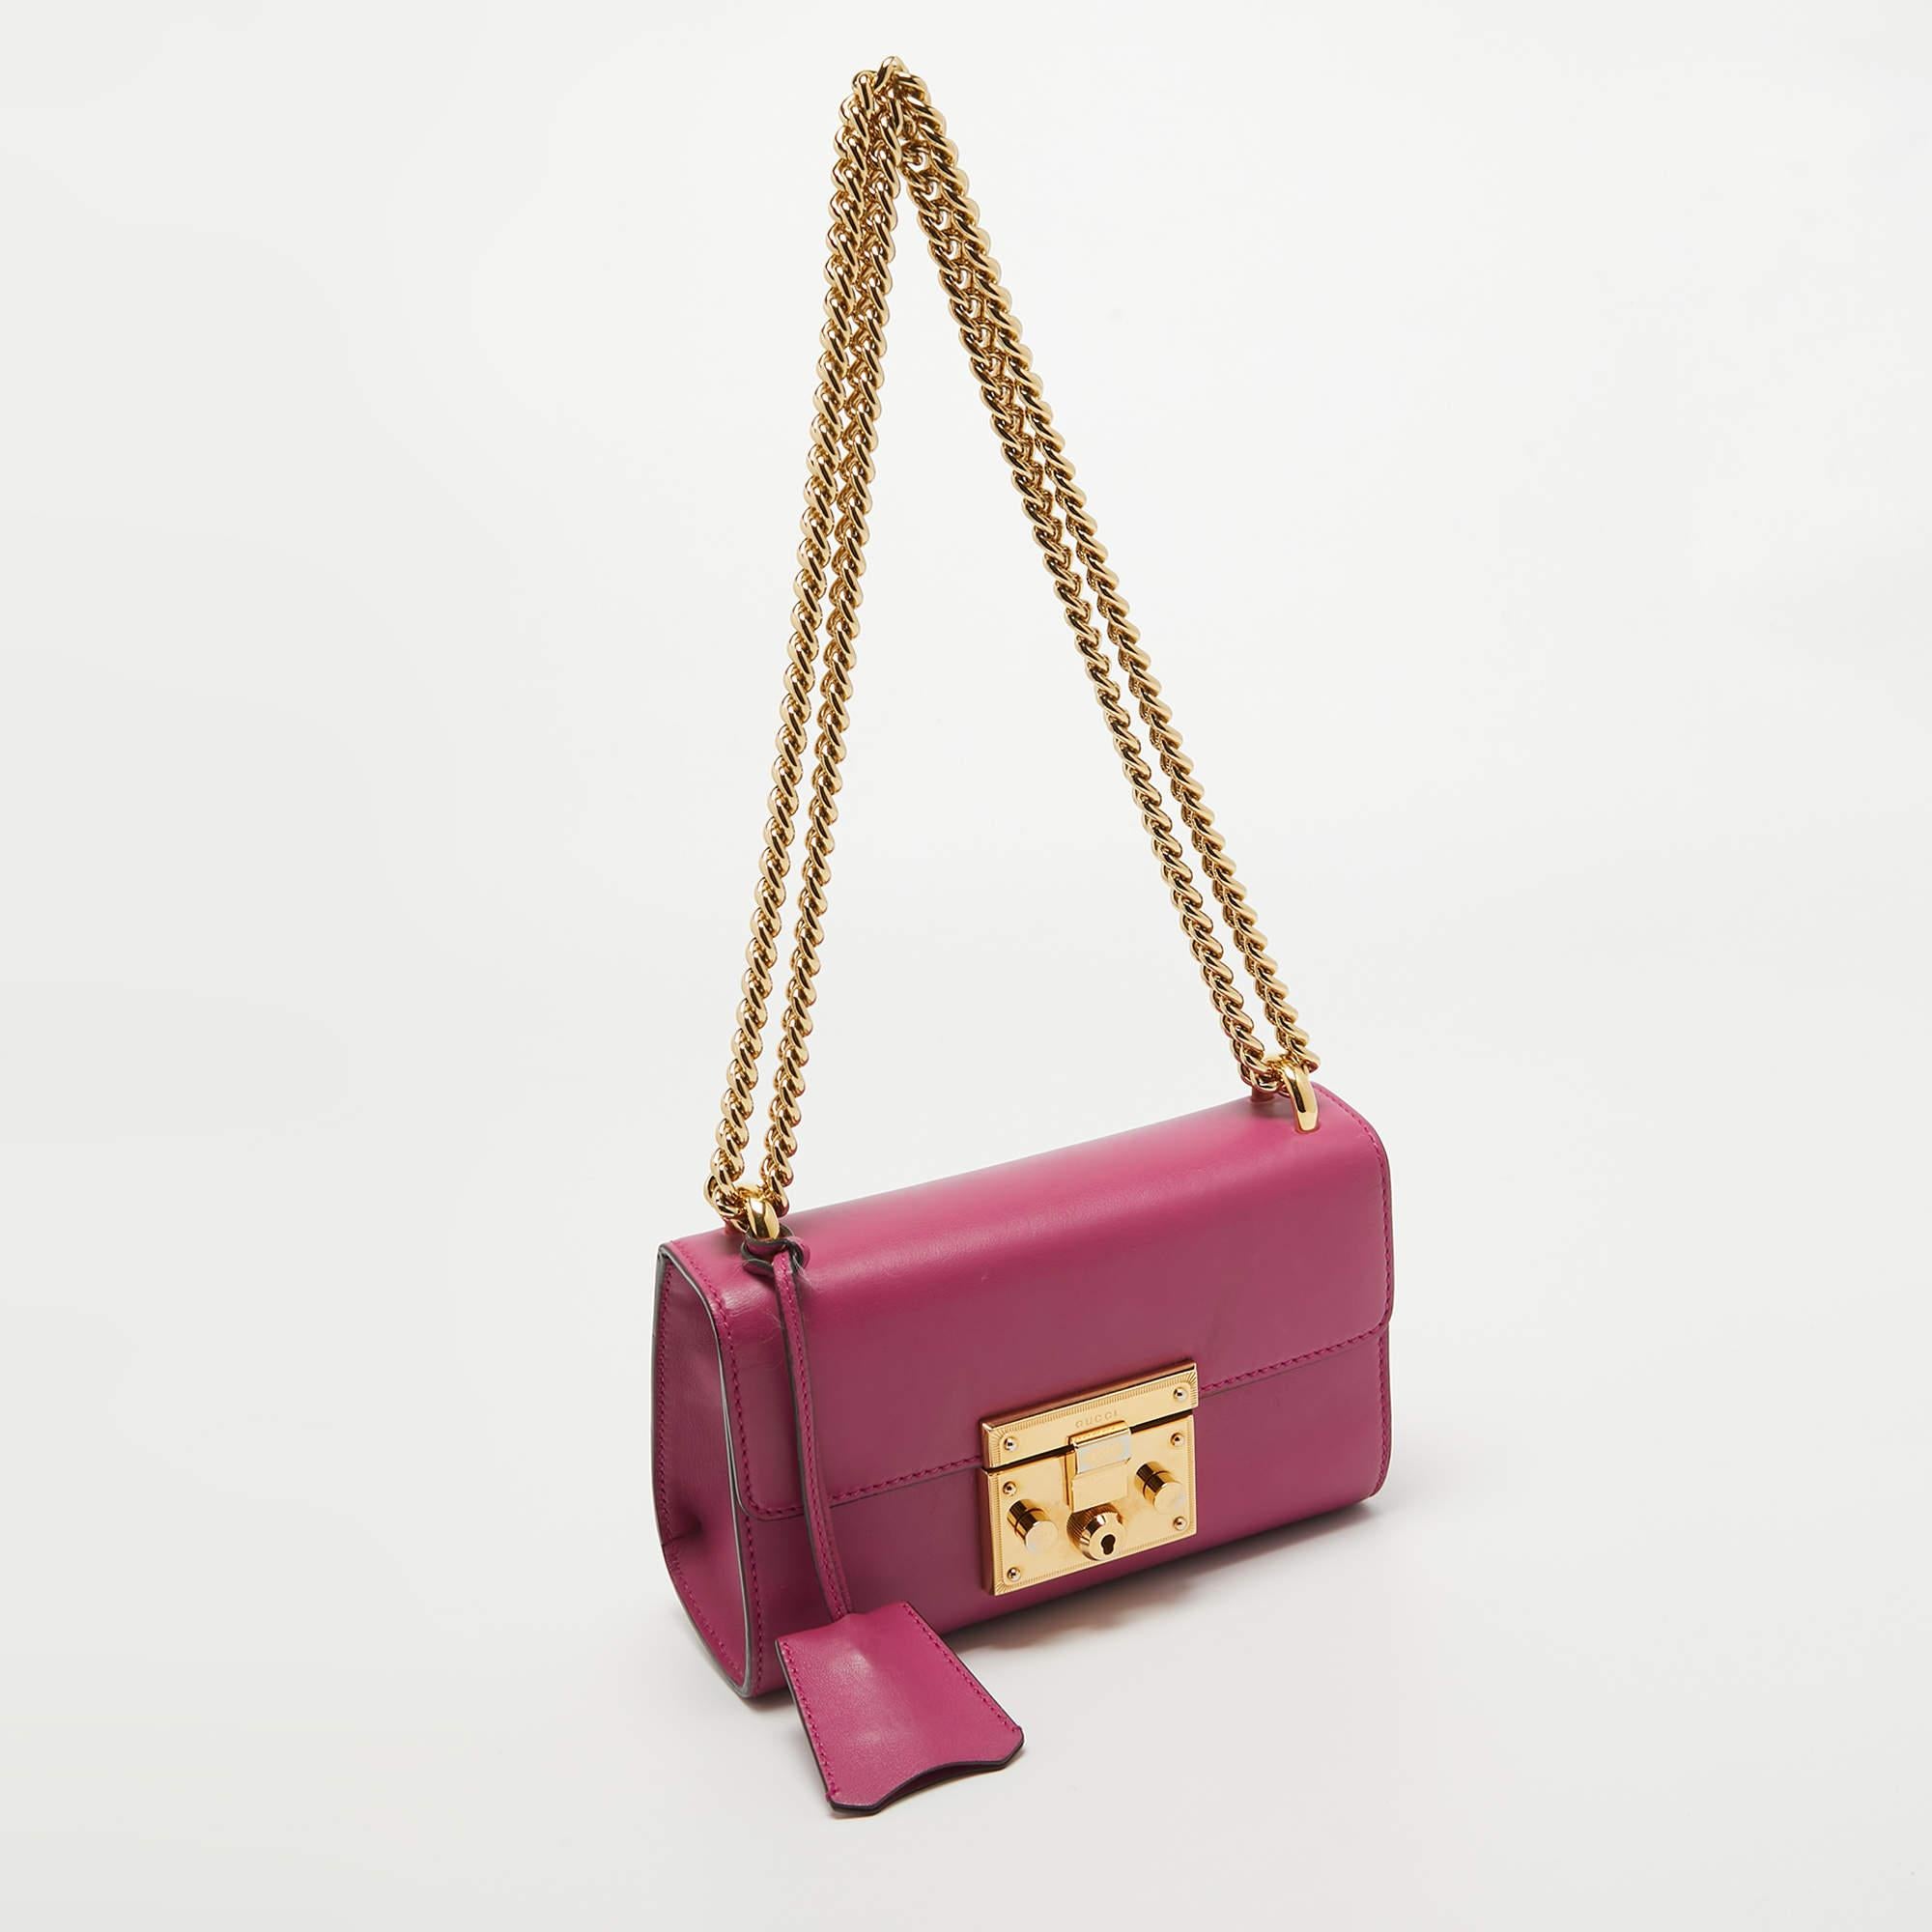 Gucci Pink Leather Small Padlock Shoulder Bag In Good Condition For Sale In Dubai, Al Qouz 2